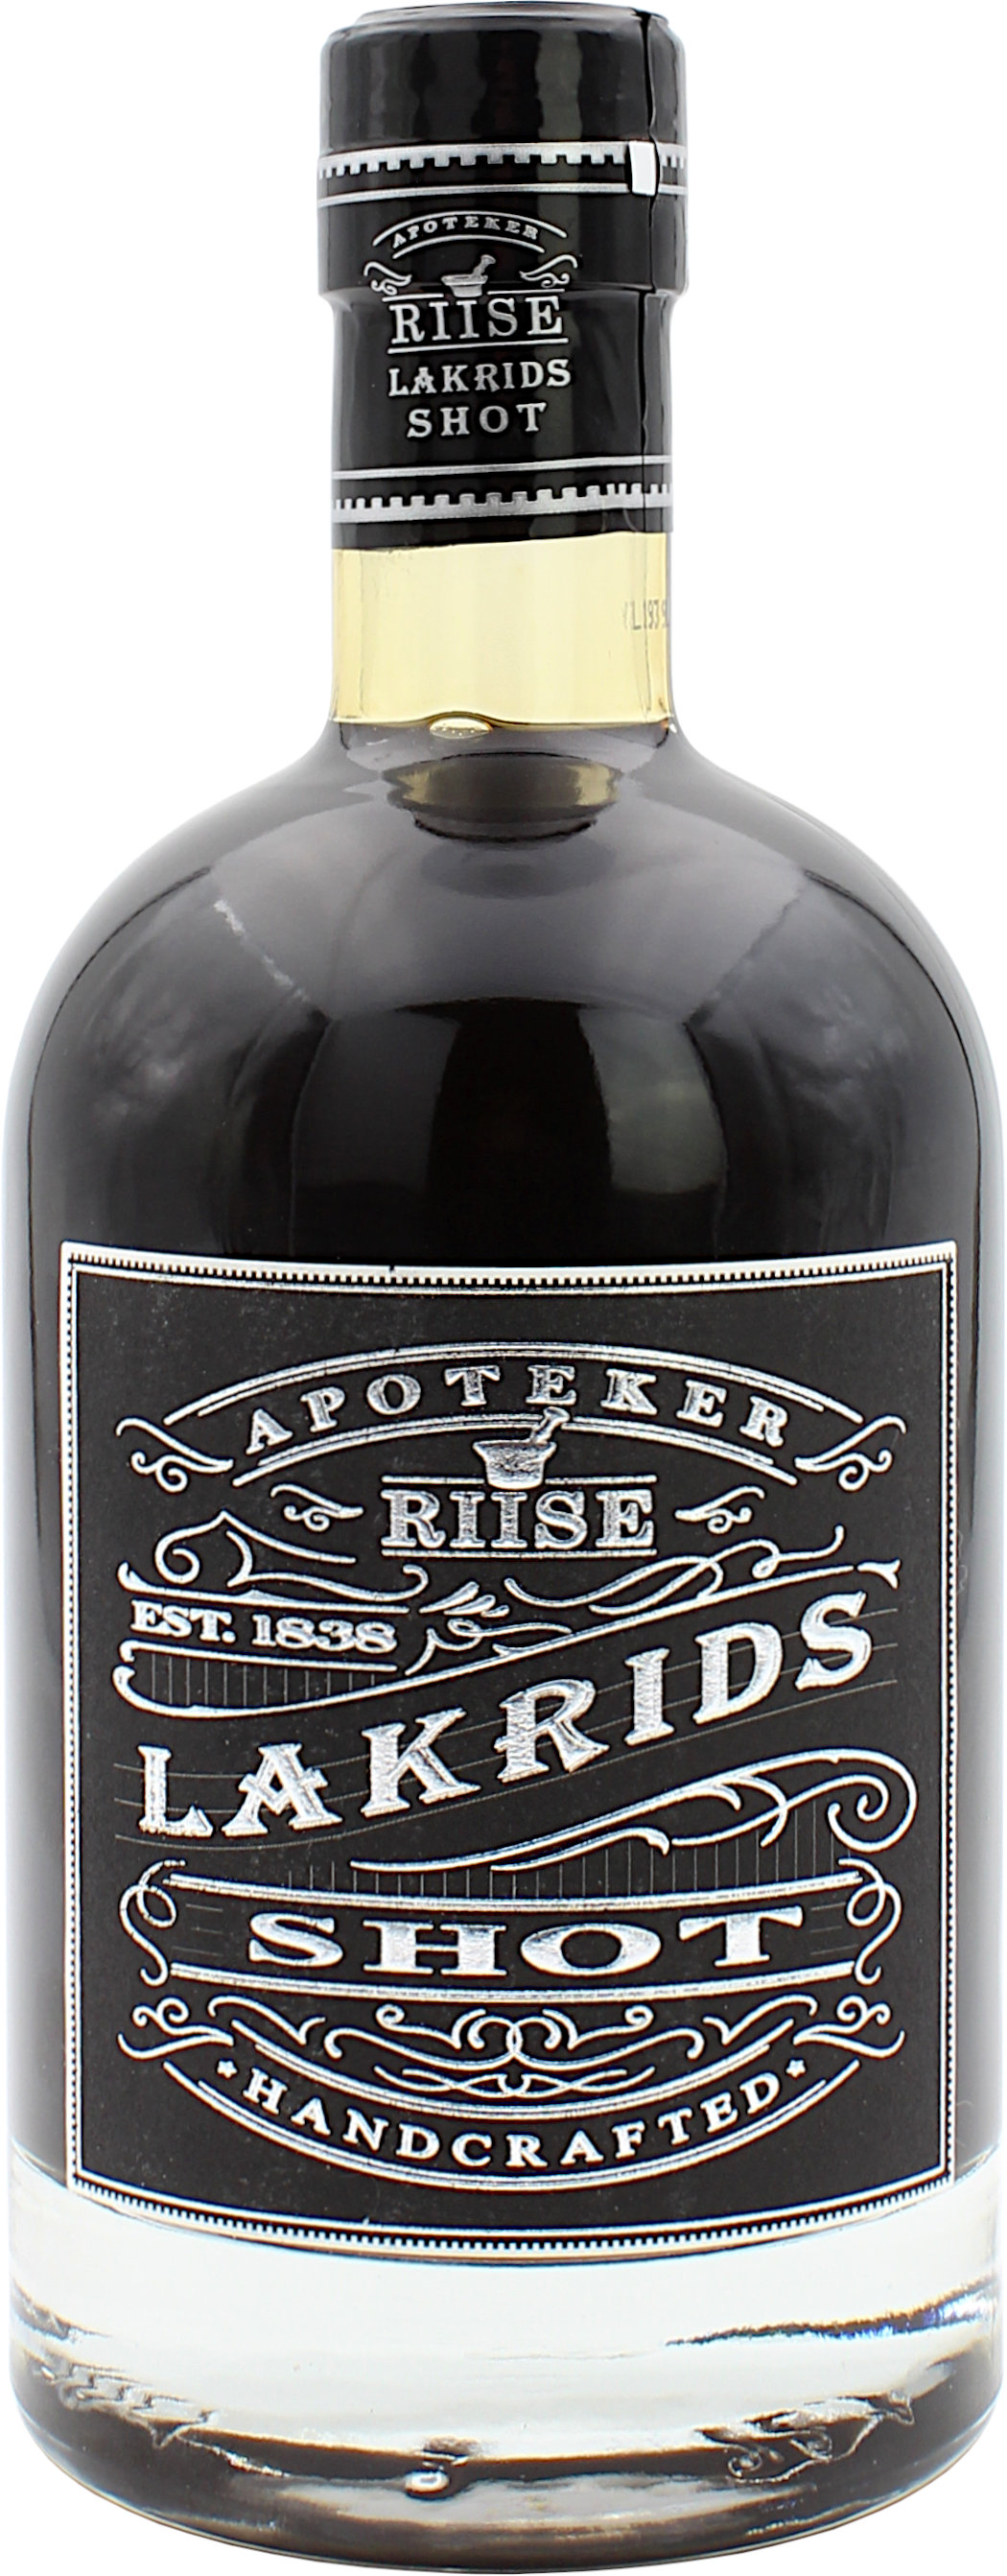 A.H. Riise Apoteker Lakrids Shot 18.0% 0,7l